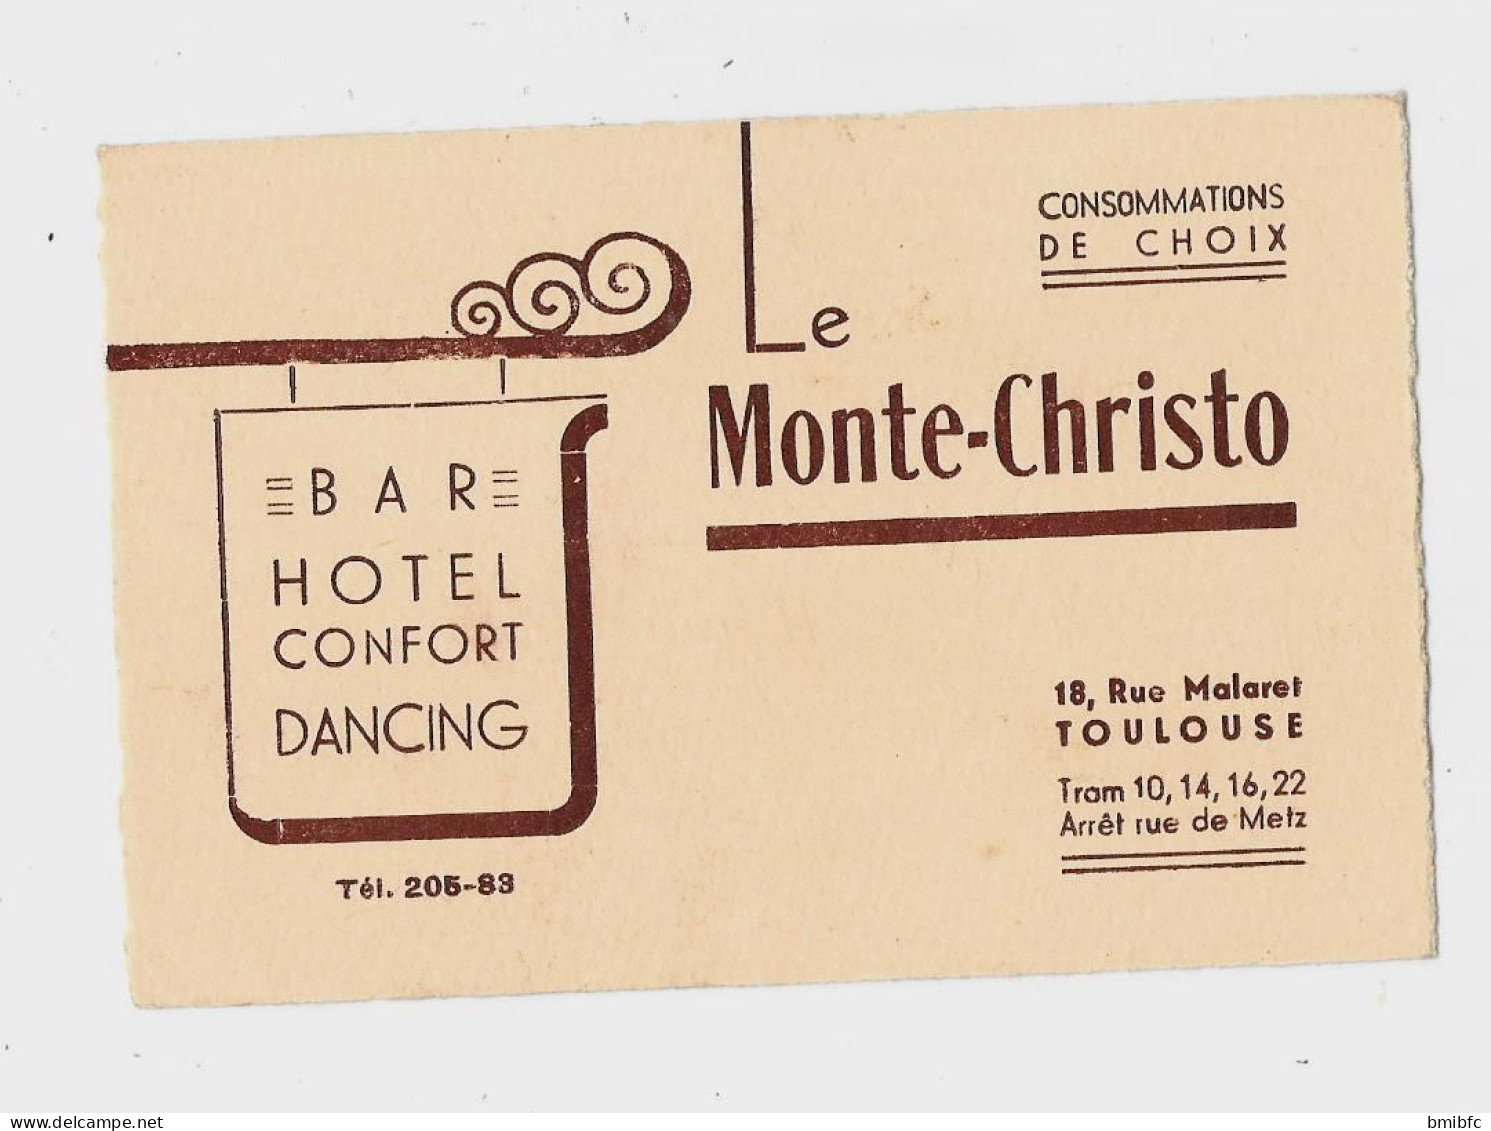 BAR HOTEL CONFORT DANCING Tél  205-83 Le Monte-Christo 18, Rue Malaret TOULOUSE Tram 10,14,16,22 - Visitekaartjes